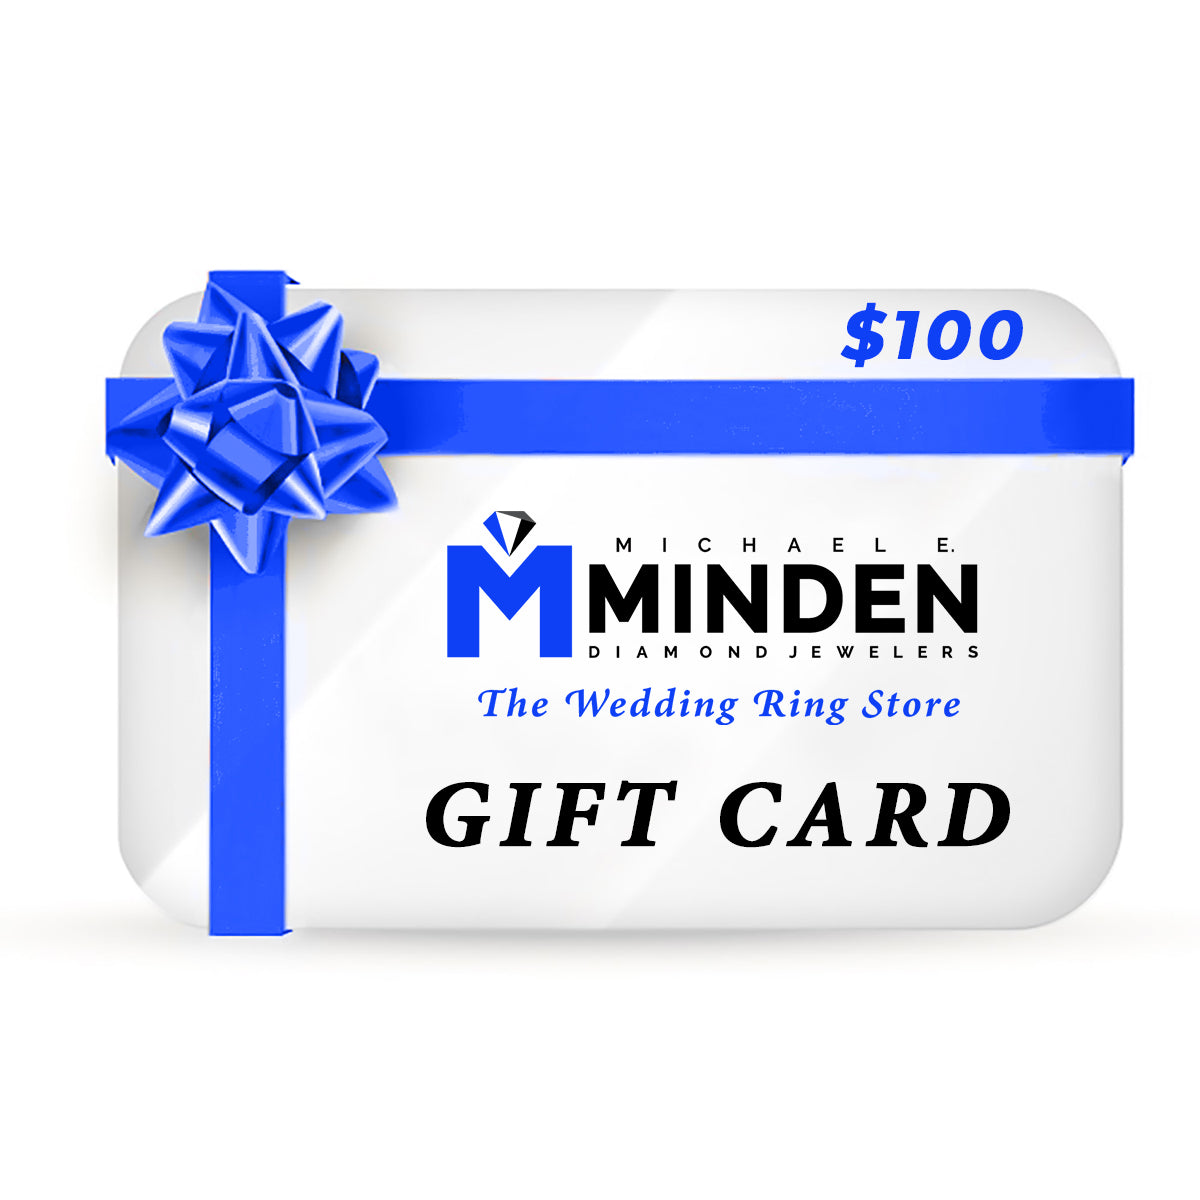 Gift Card - Michael E. Minden Diamond Jewelers